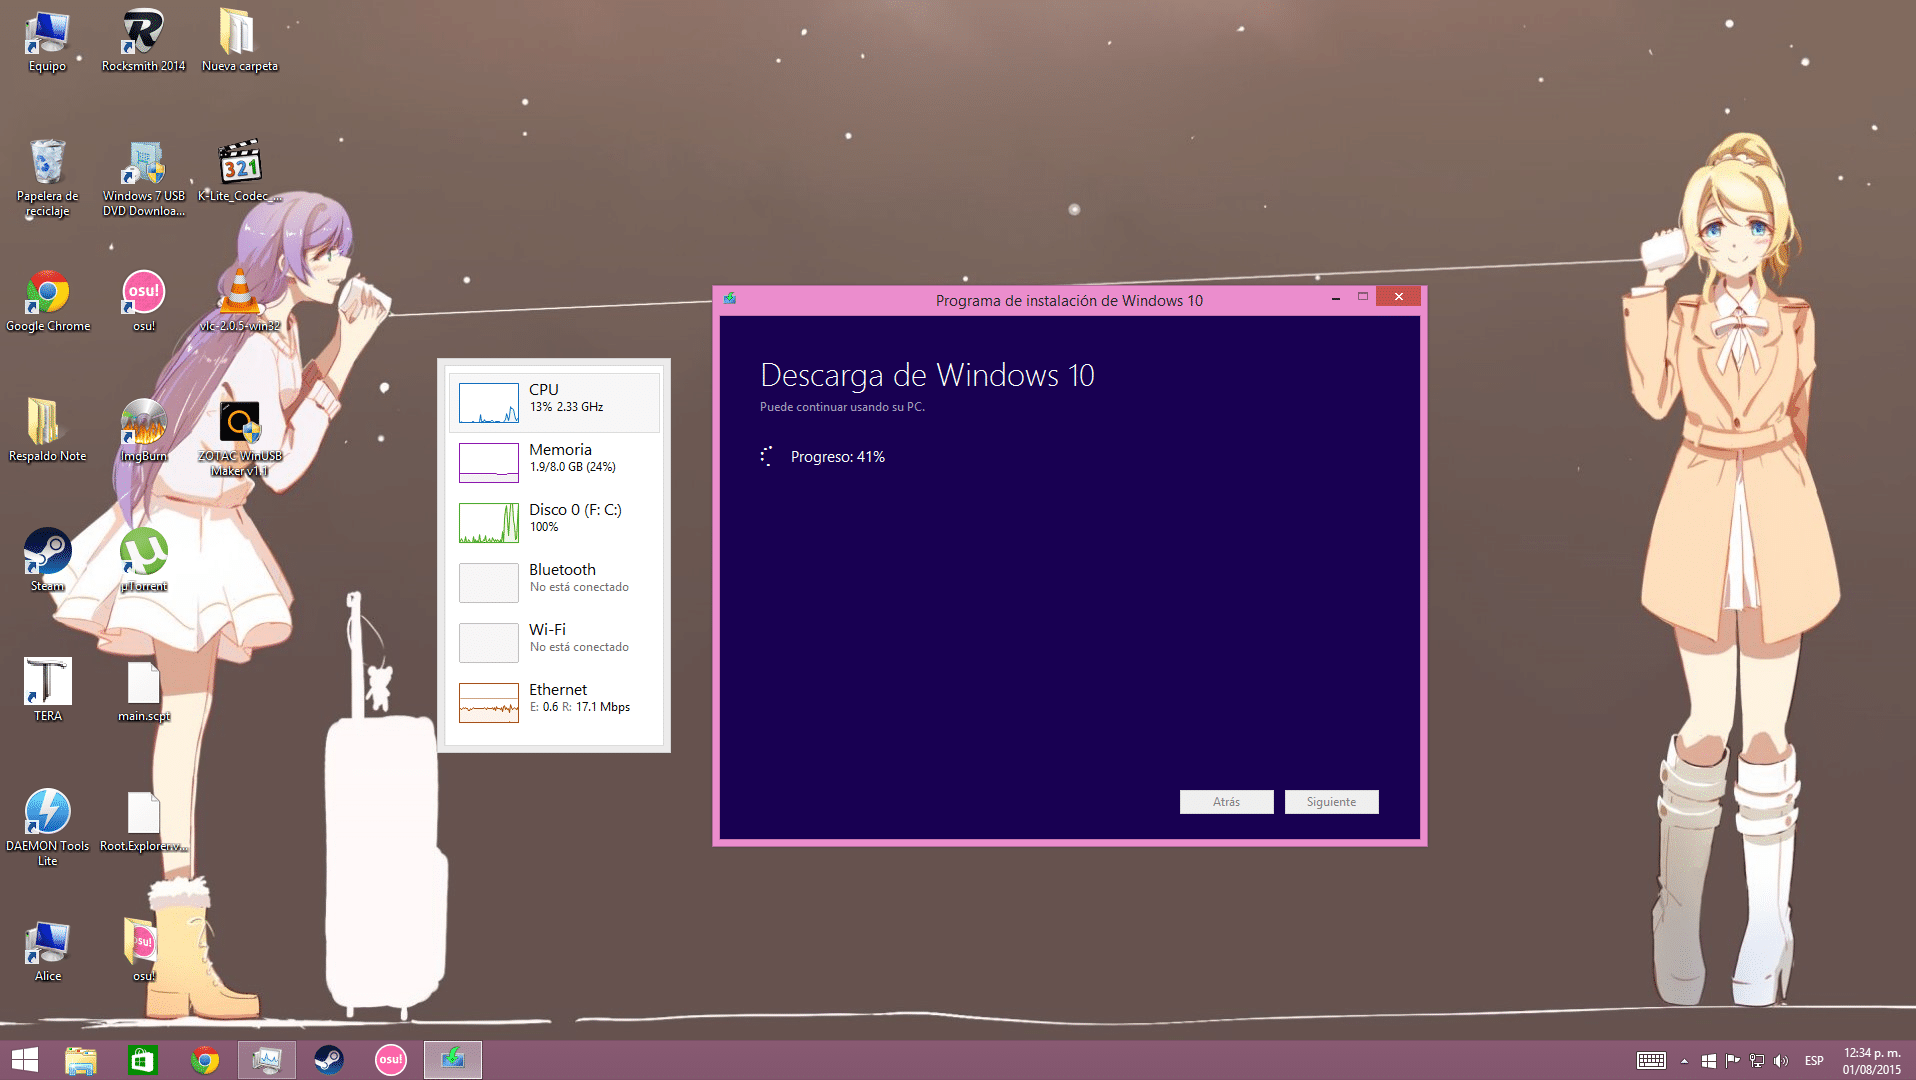 Descargando Windows 10